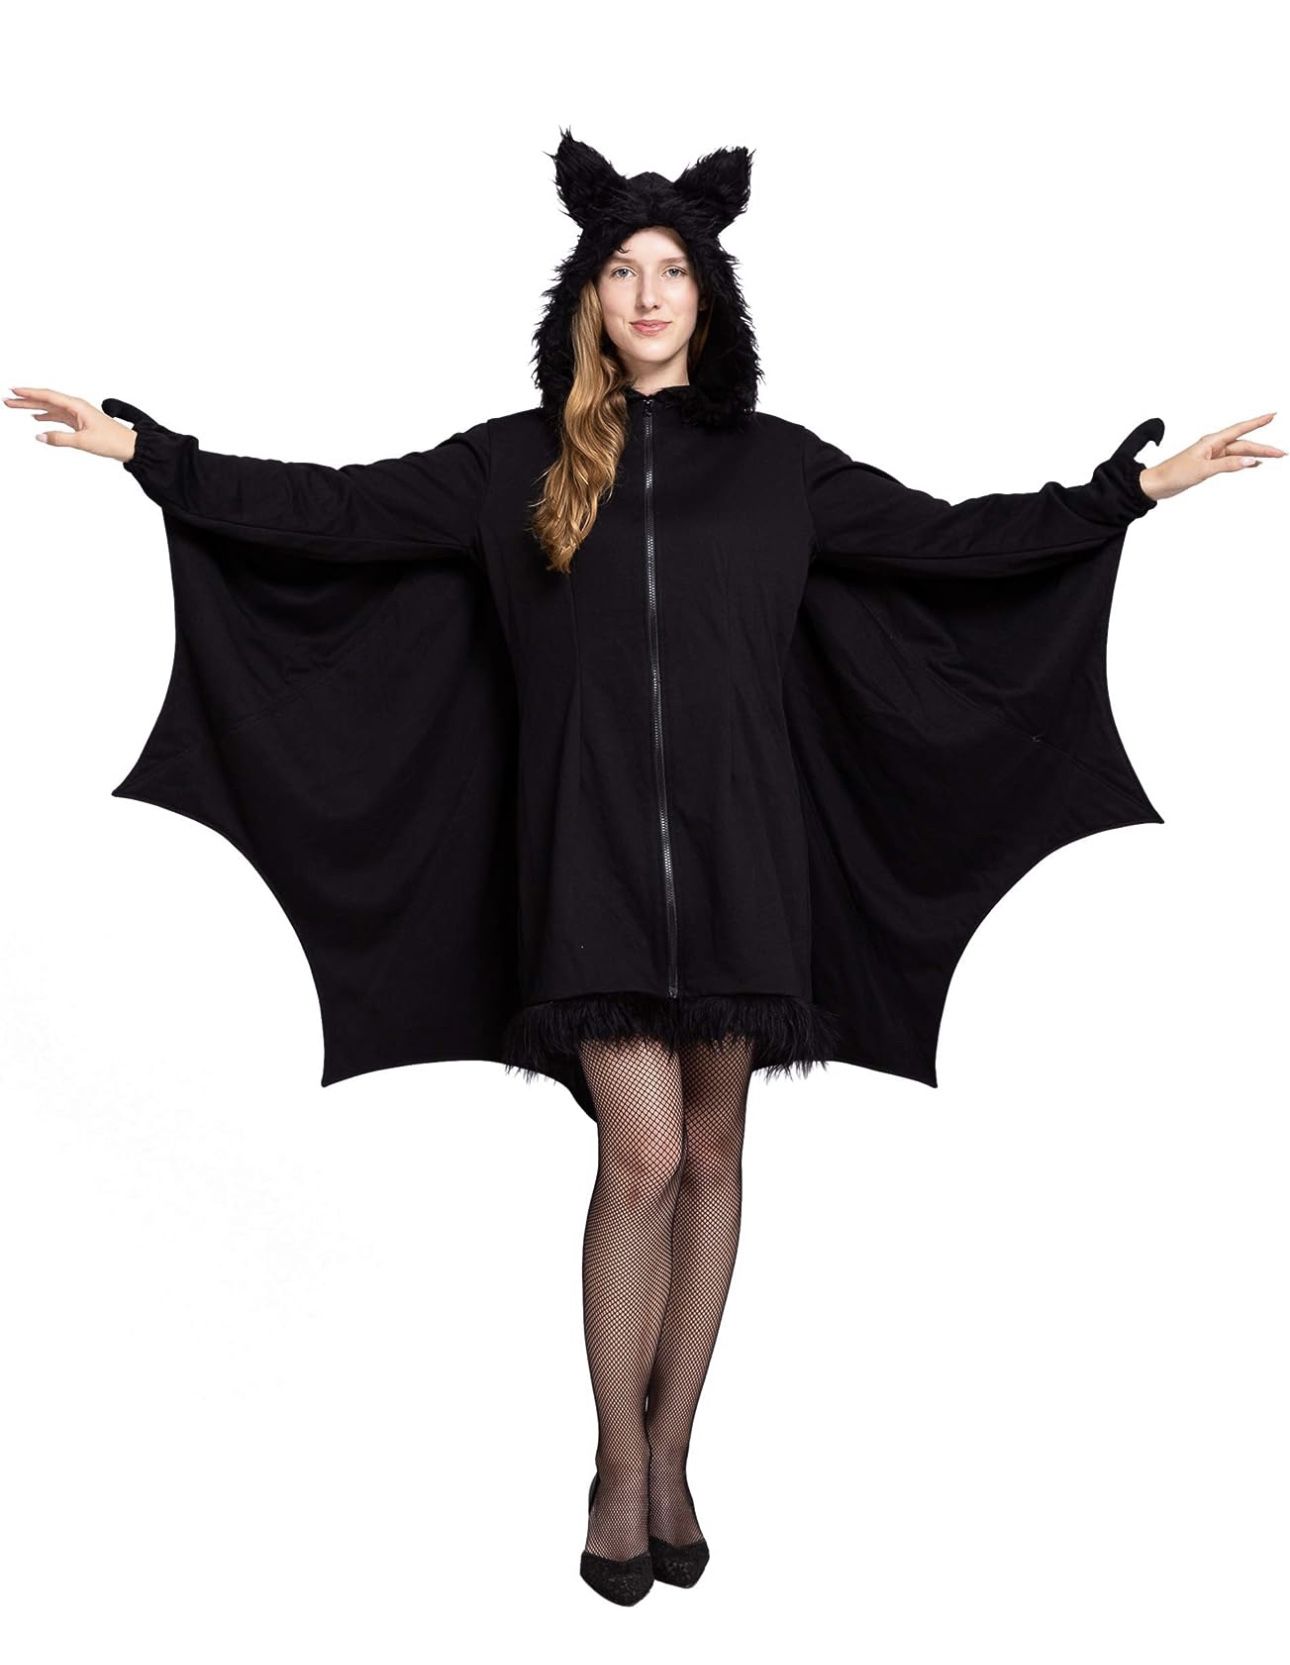 Size Large, Women’s Bat Costume, Hoodie, Jumpsuit Halloween Costume (a2)